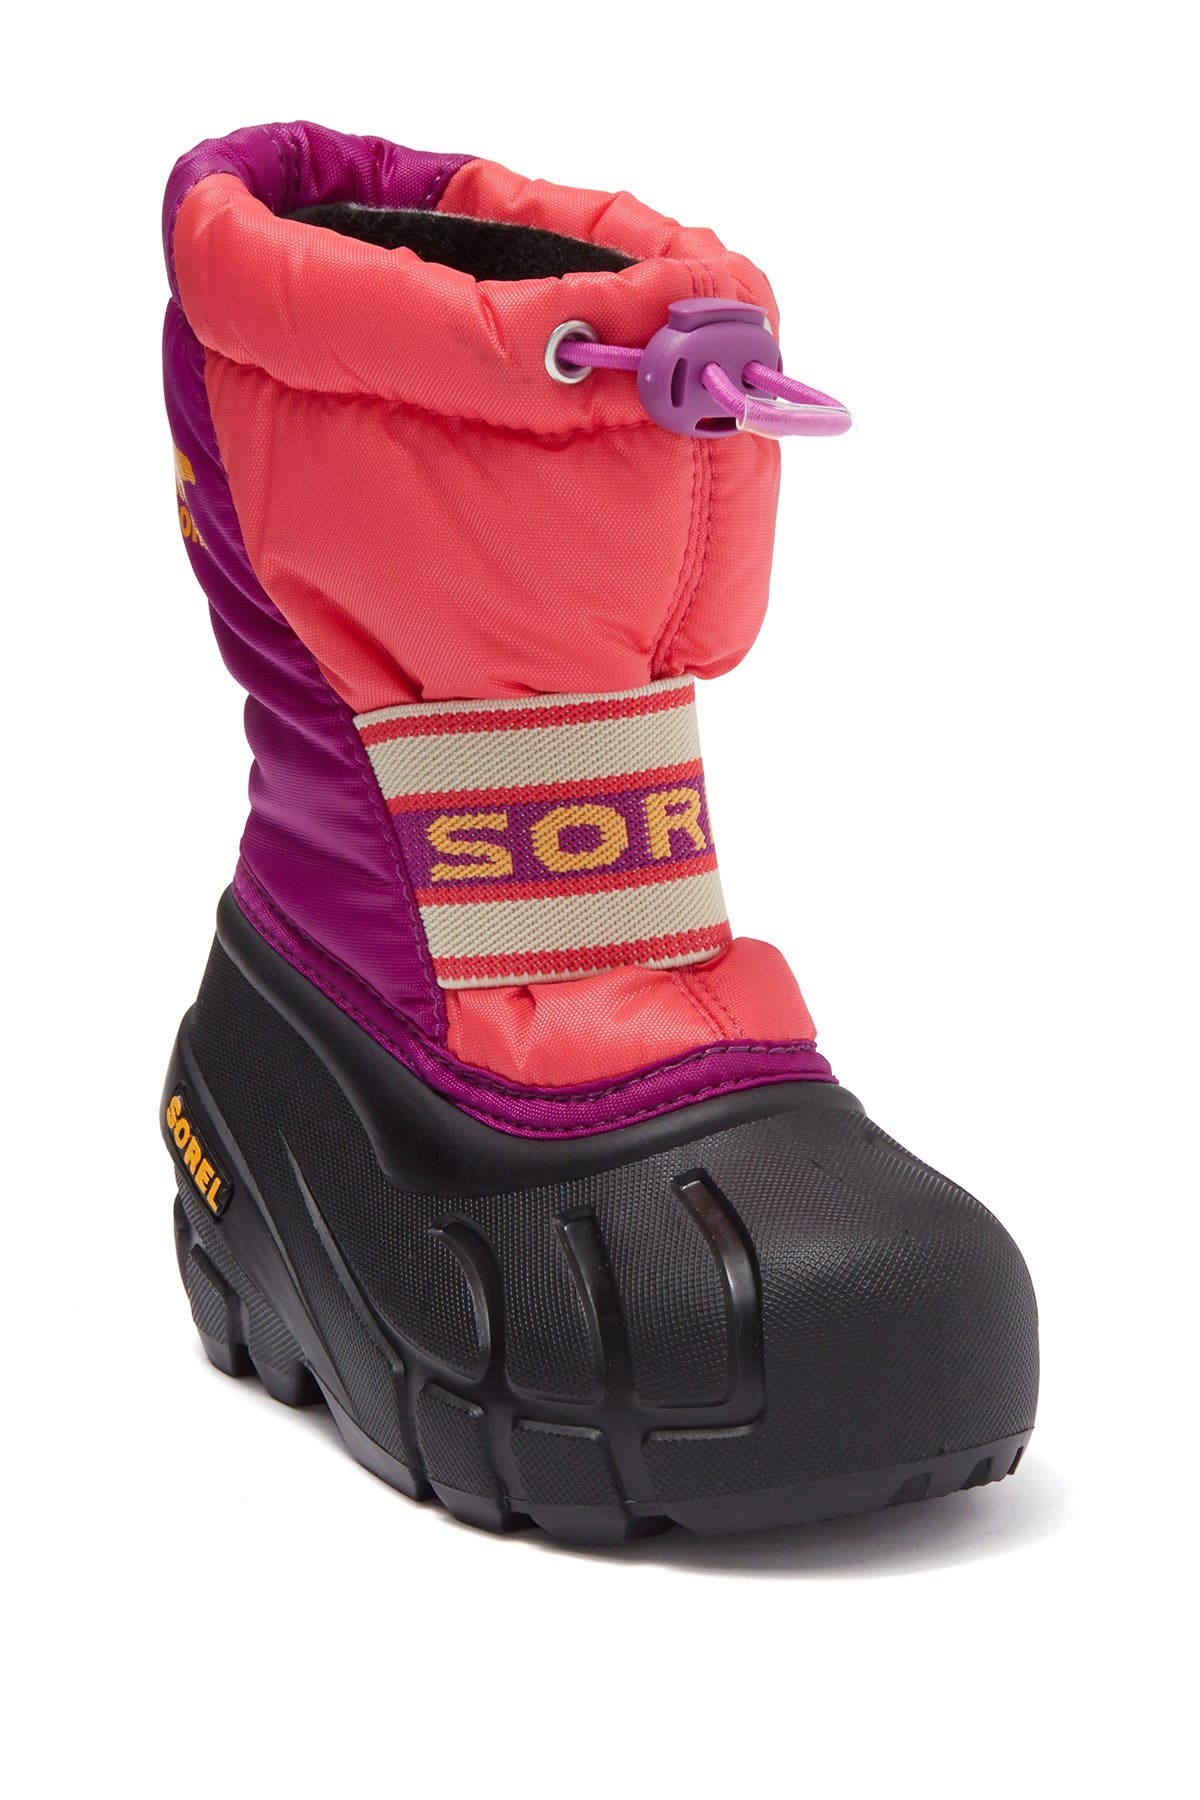 Sorel | Youth Cub Water Resistant Shoe 